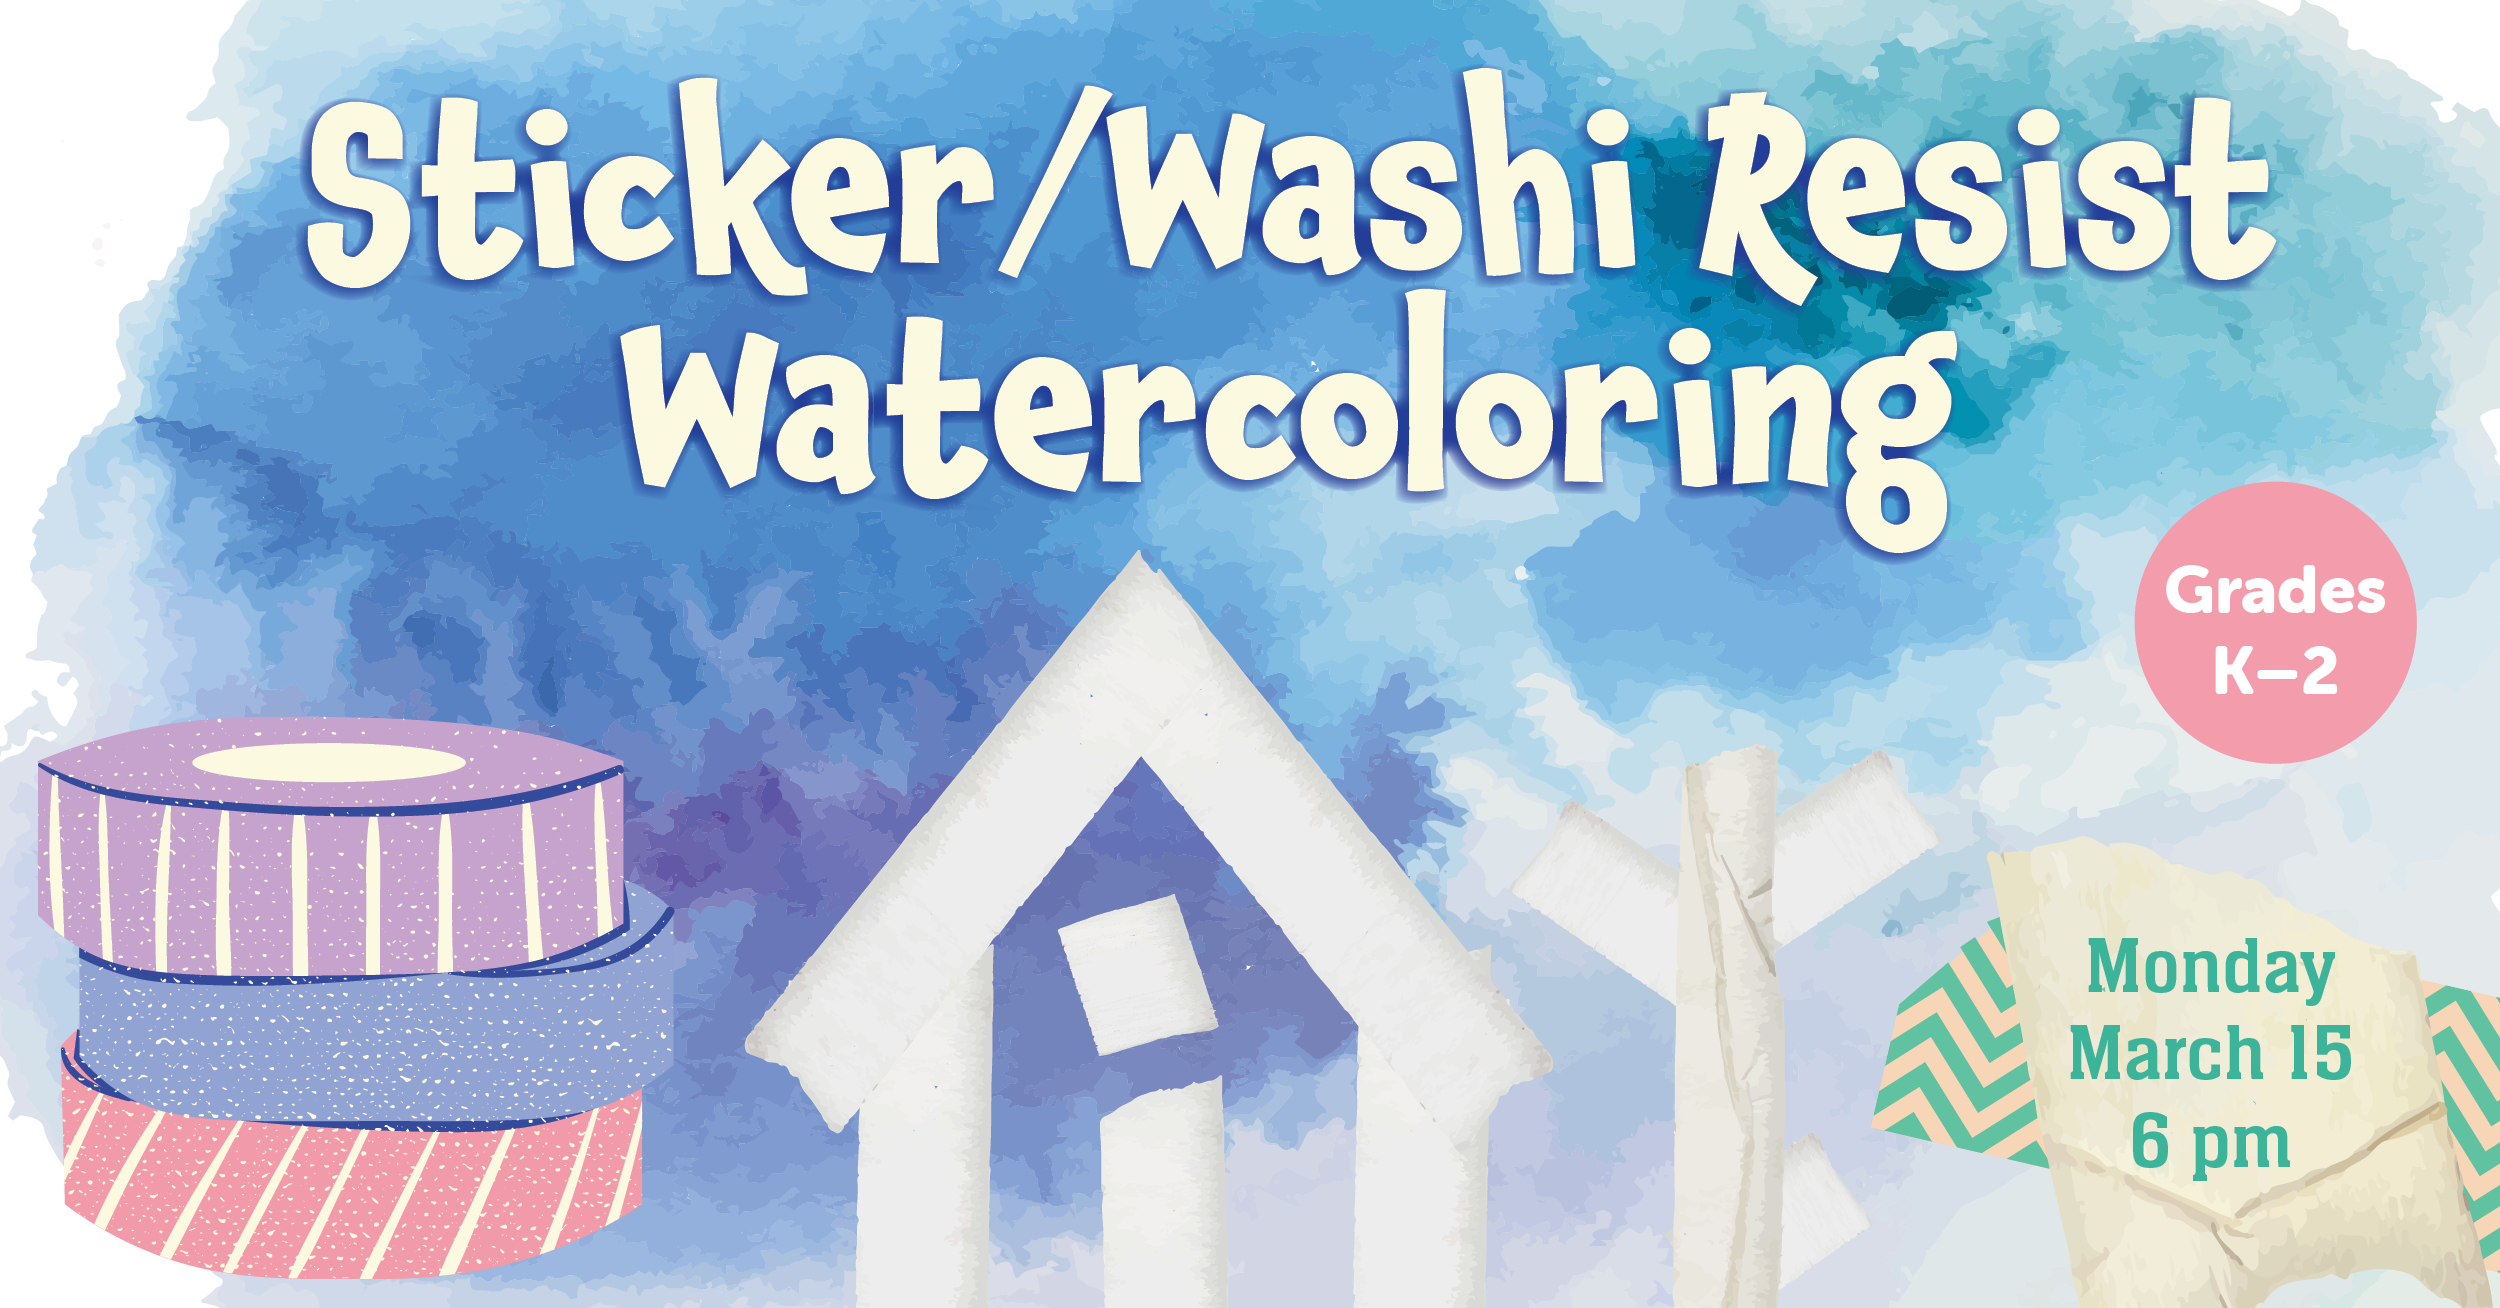 Sticker/Washi Resist Watercoloring. Grades K to 2. Monday, March 15 at 6pm